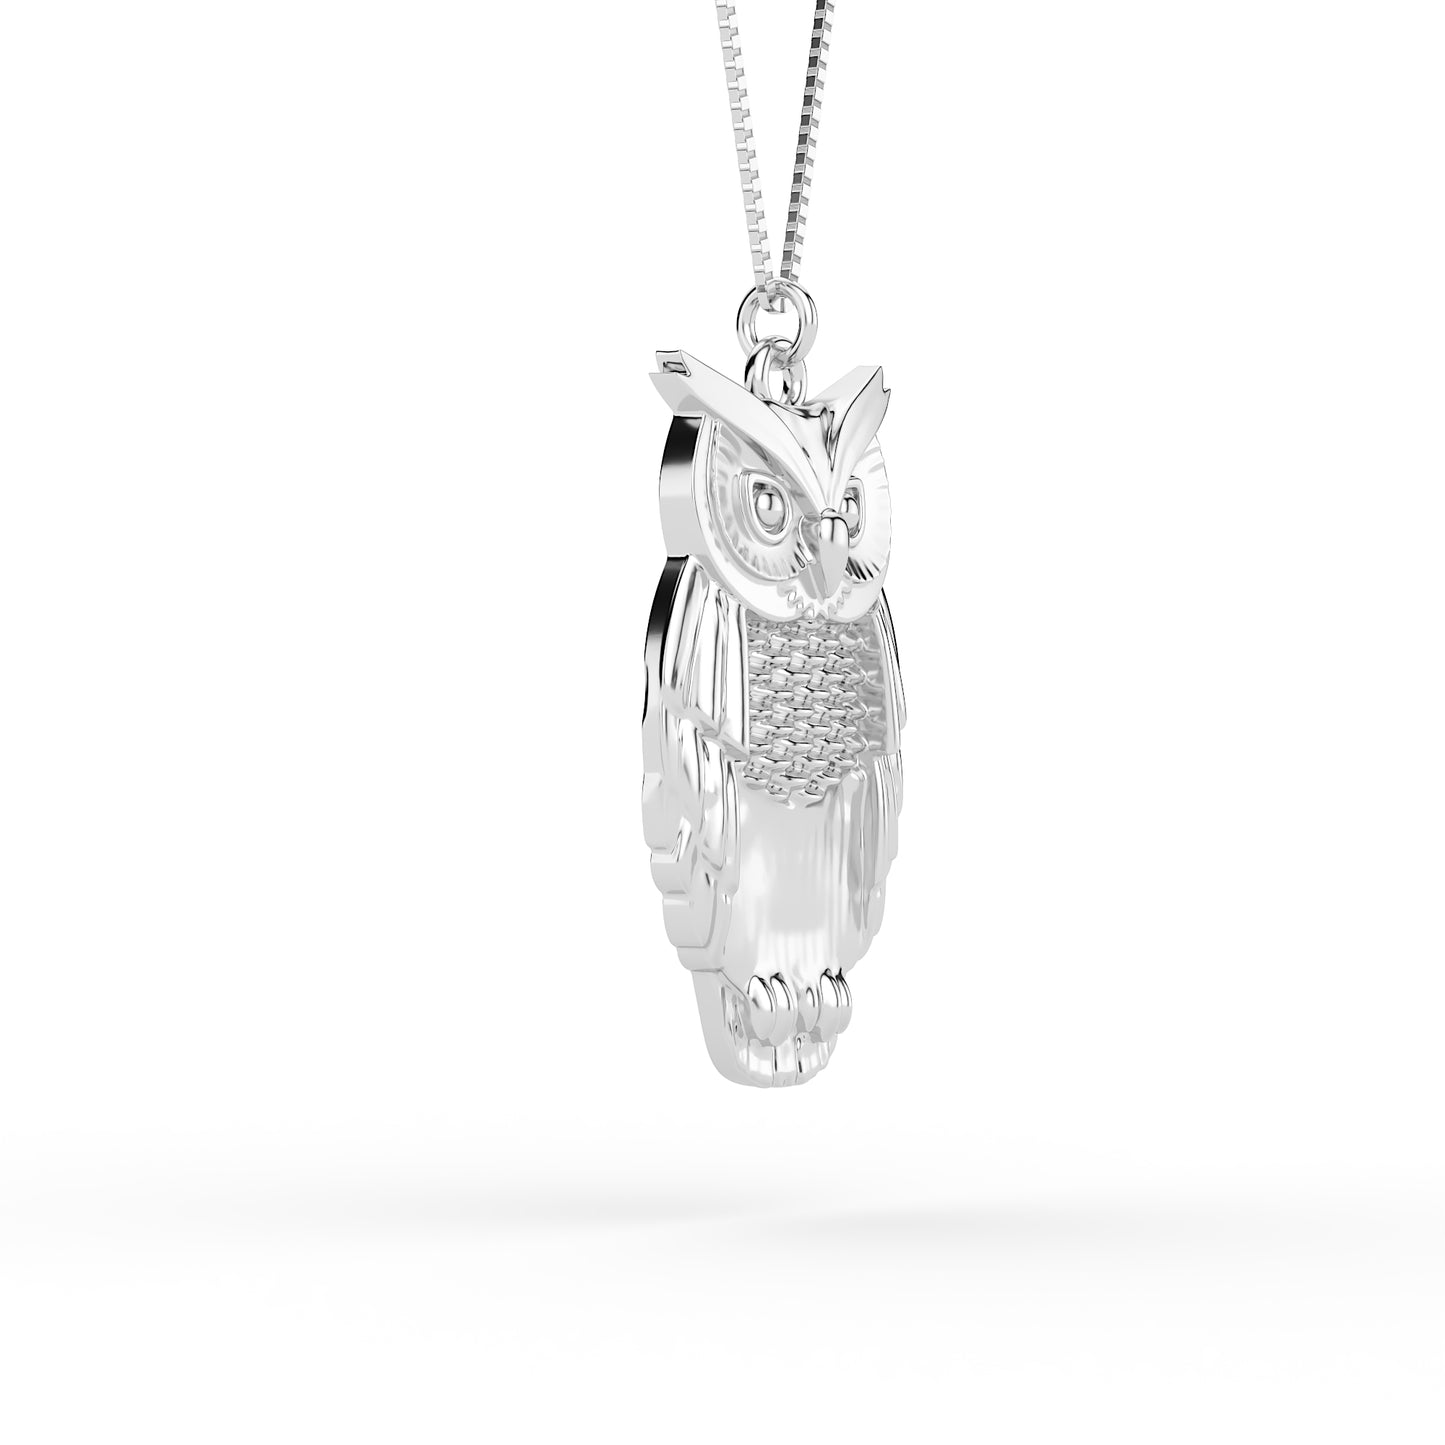 Midnight Owl Necklace